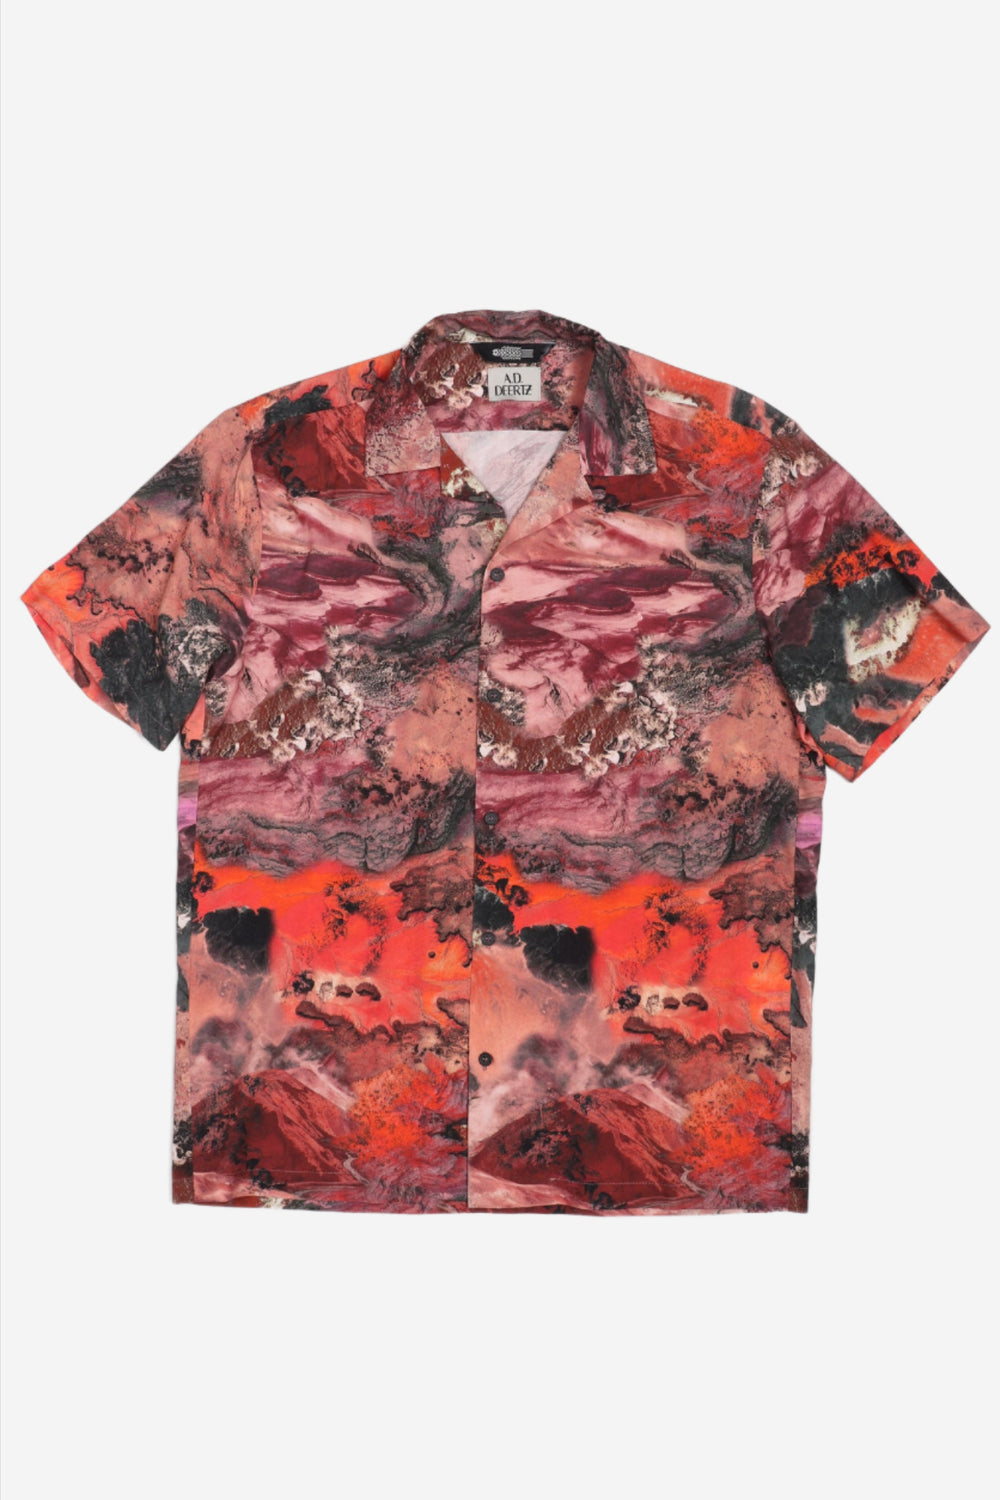 Wakame Shirt Red Rocks